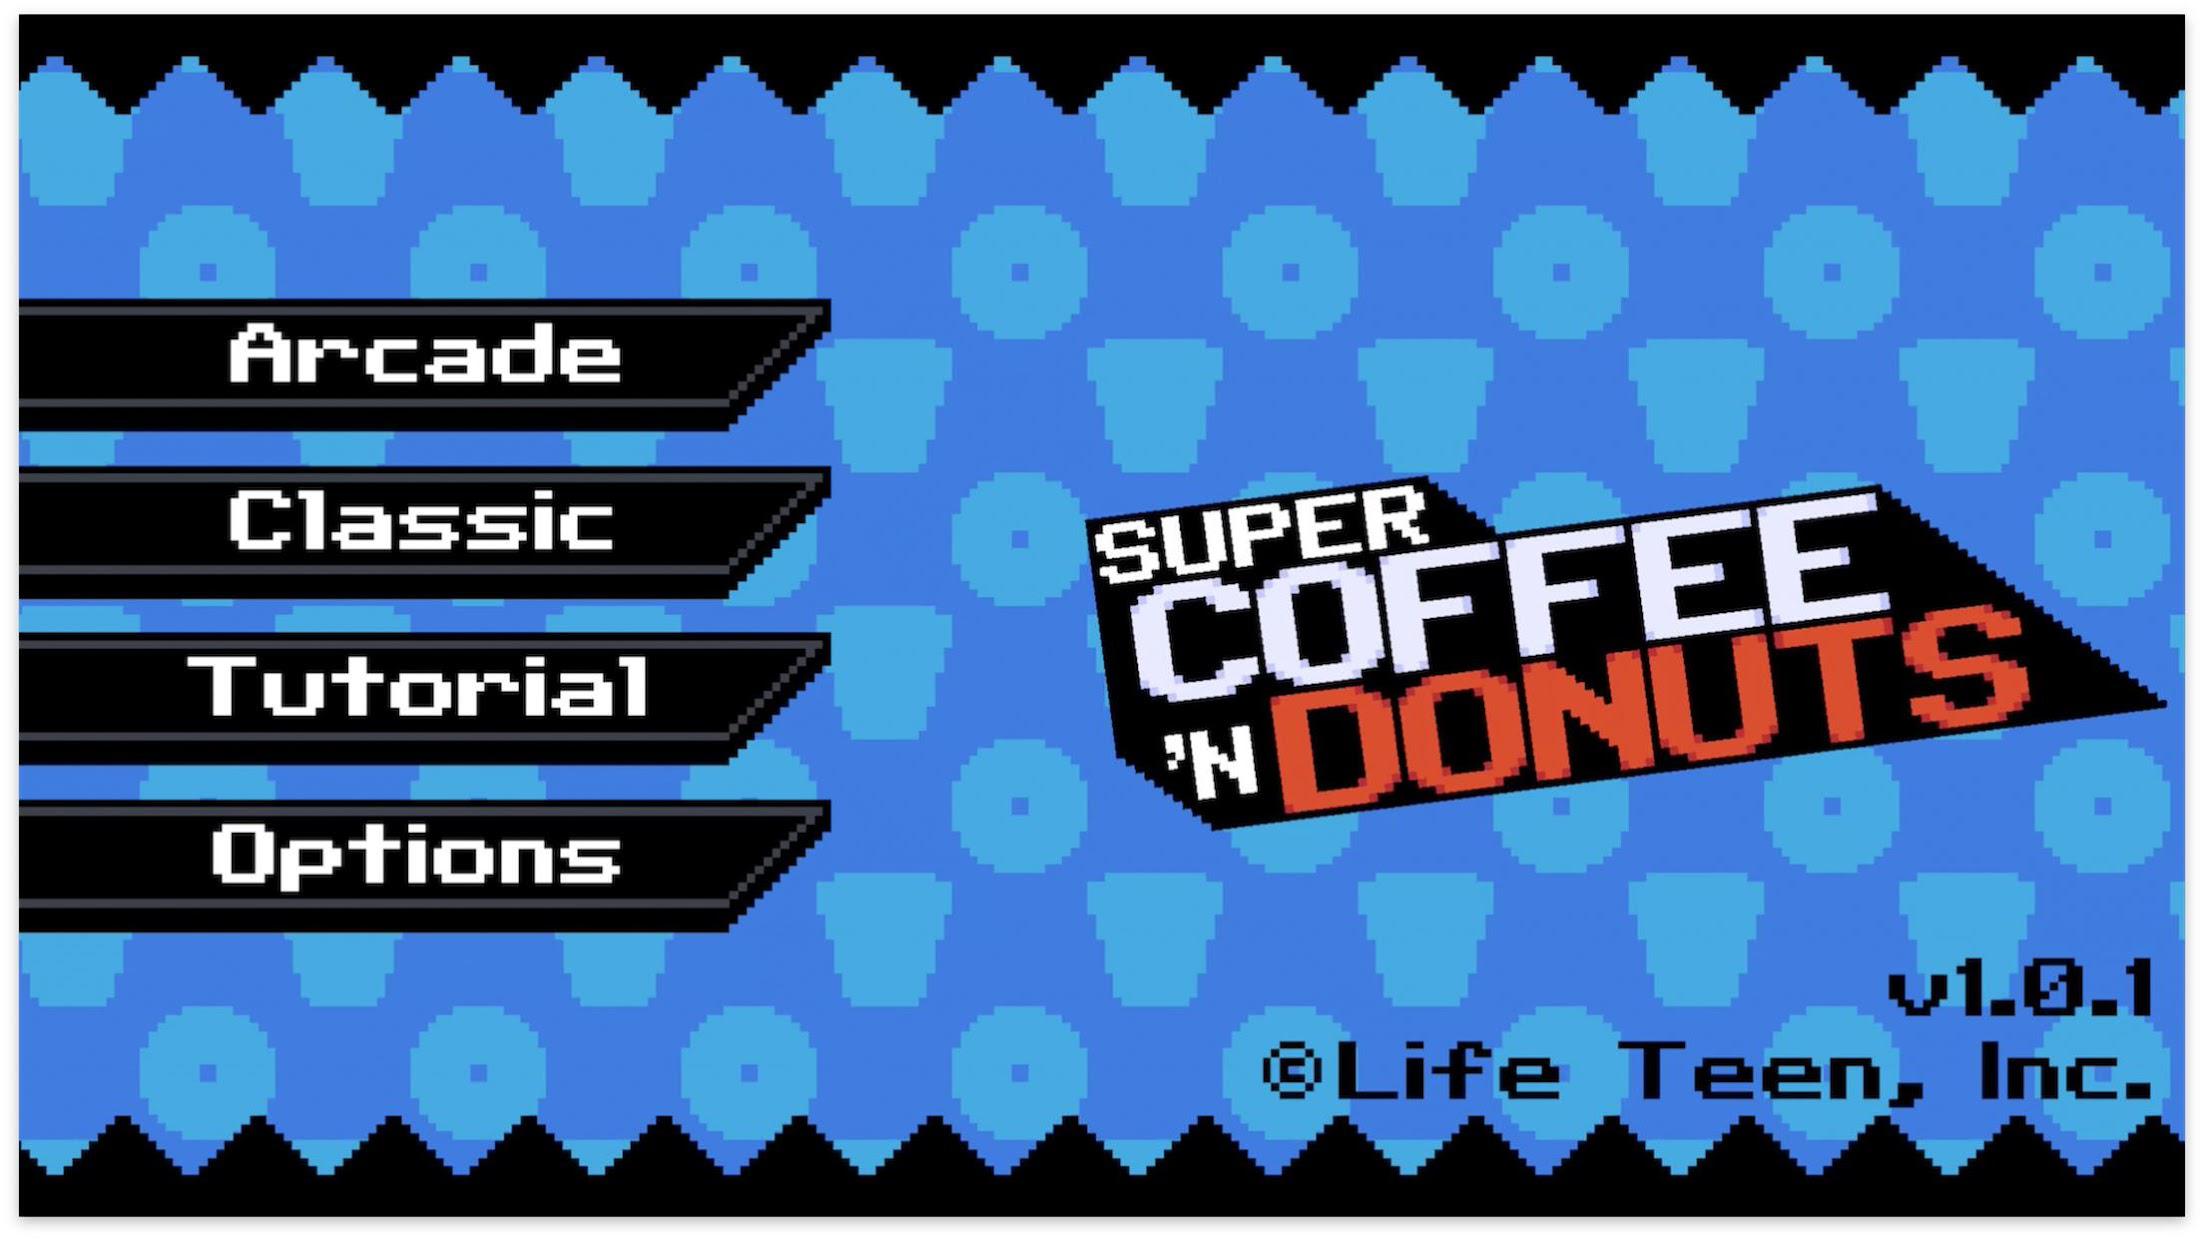 Super Coffee 'n Donuts